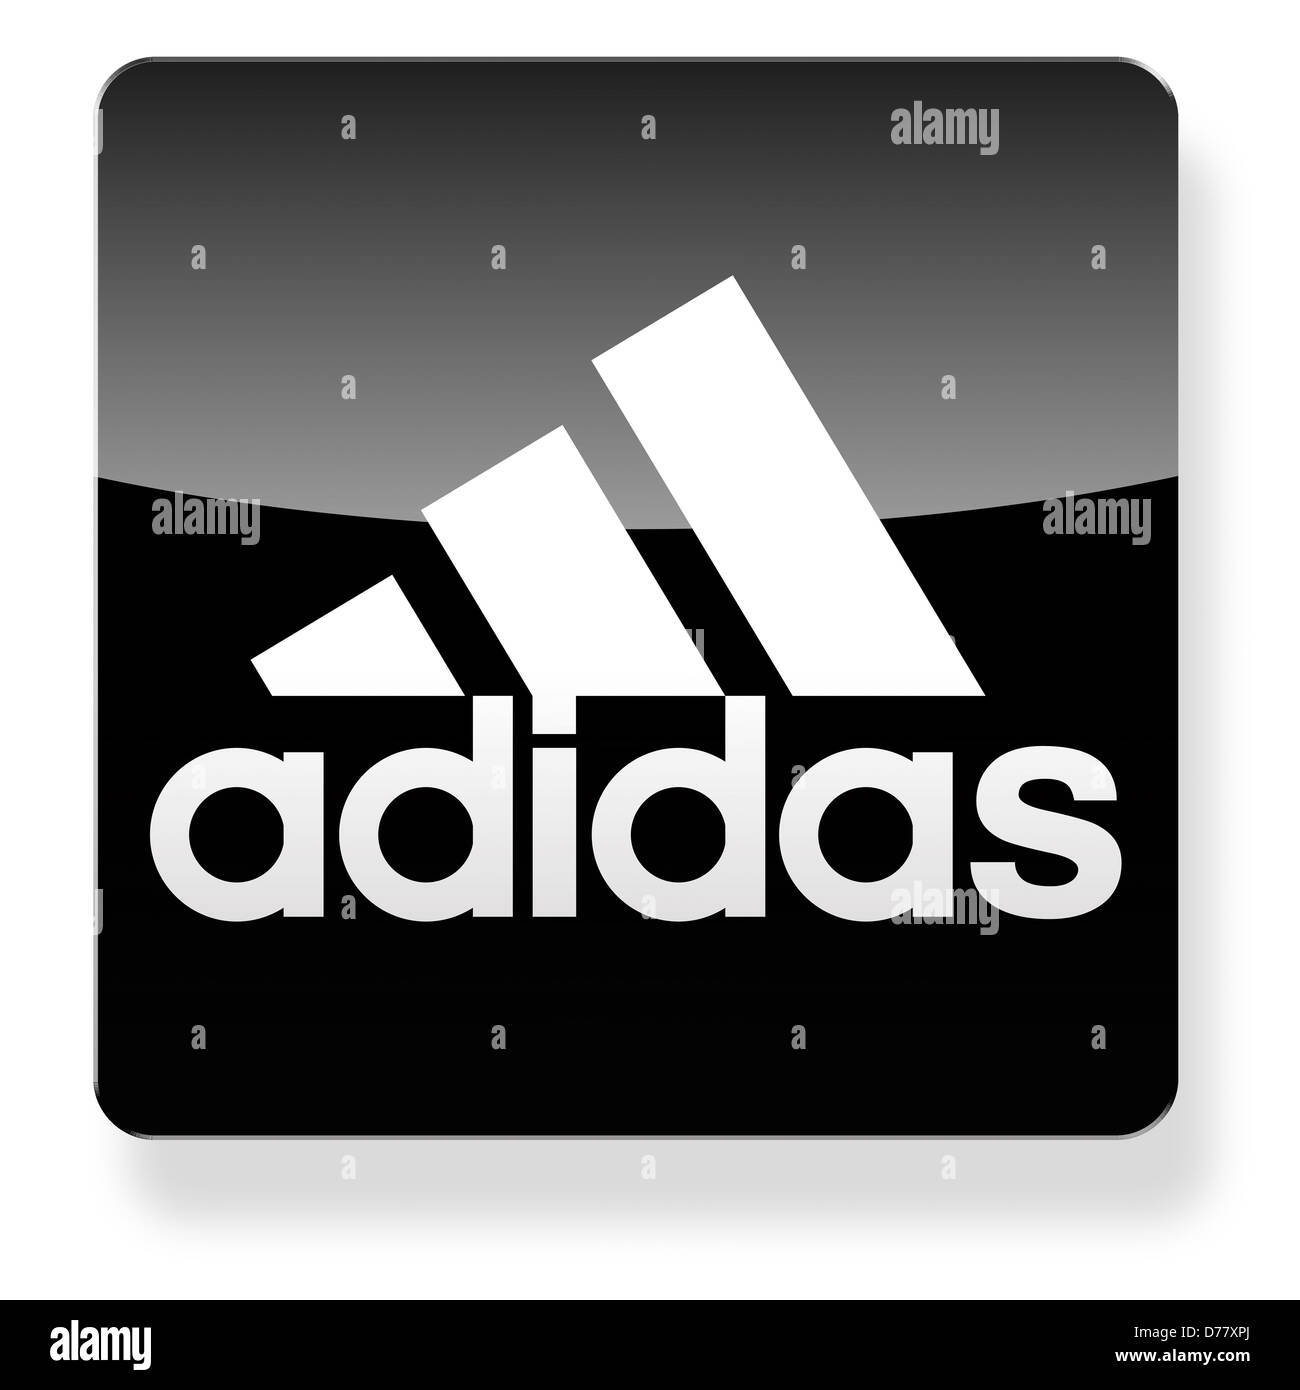 Adidas-Logo als ein app-Symbol. Clipping-Pfad enthalten Stockfotografie -  Alamy